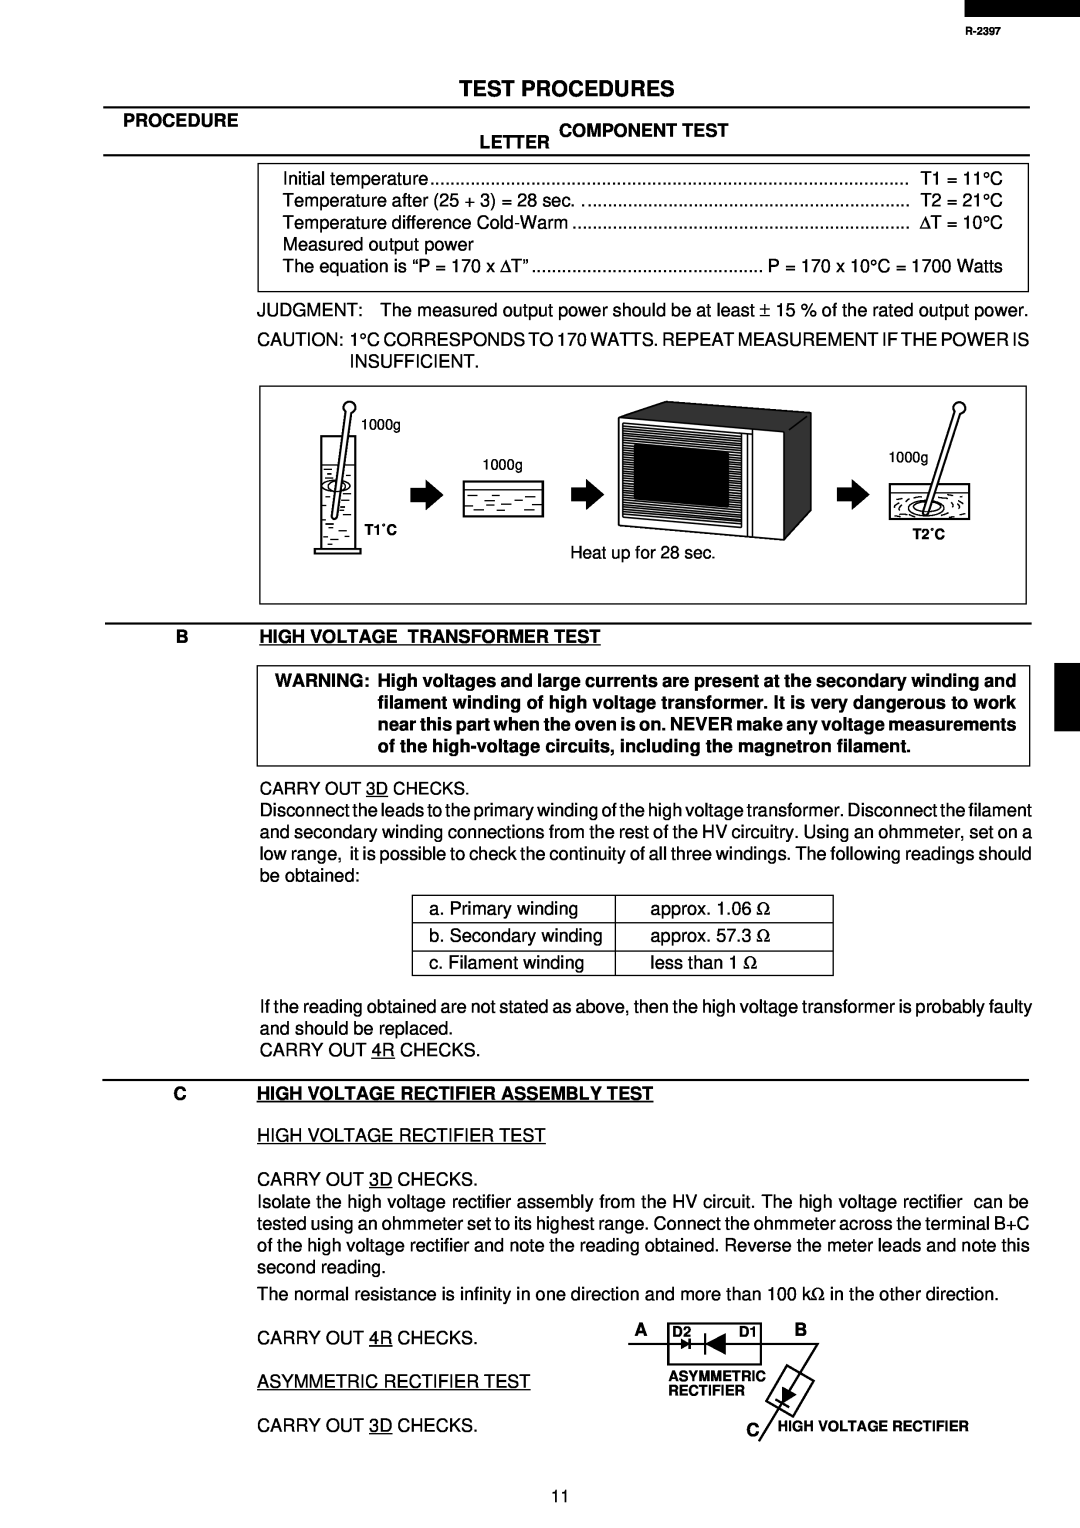 Sharp R-2397 service manual Letter Component Test, Bhigh Voltage Transformer Test, Test Procedures 